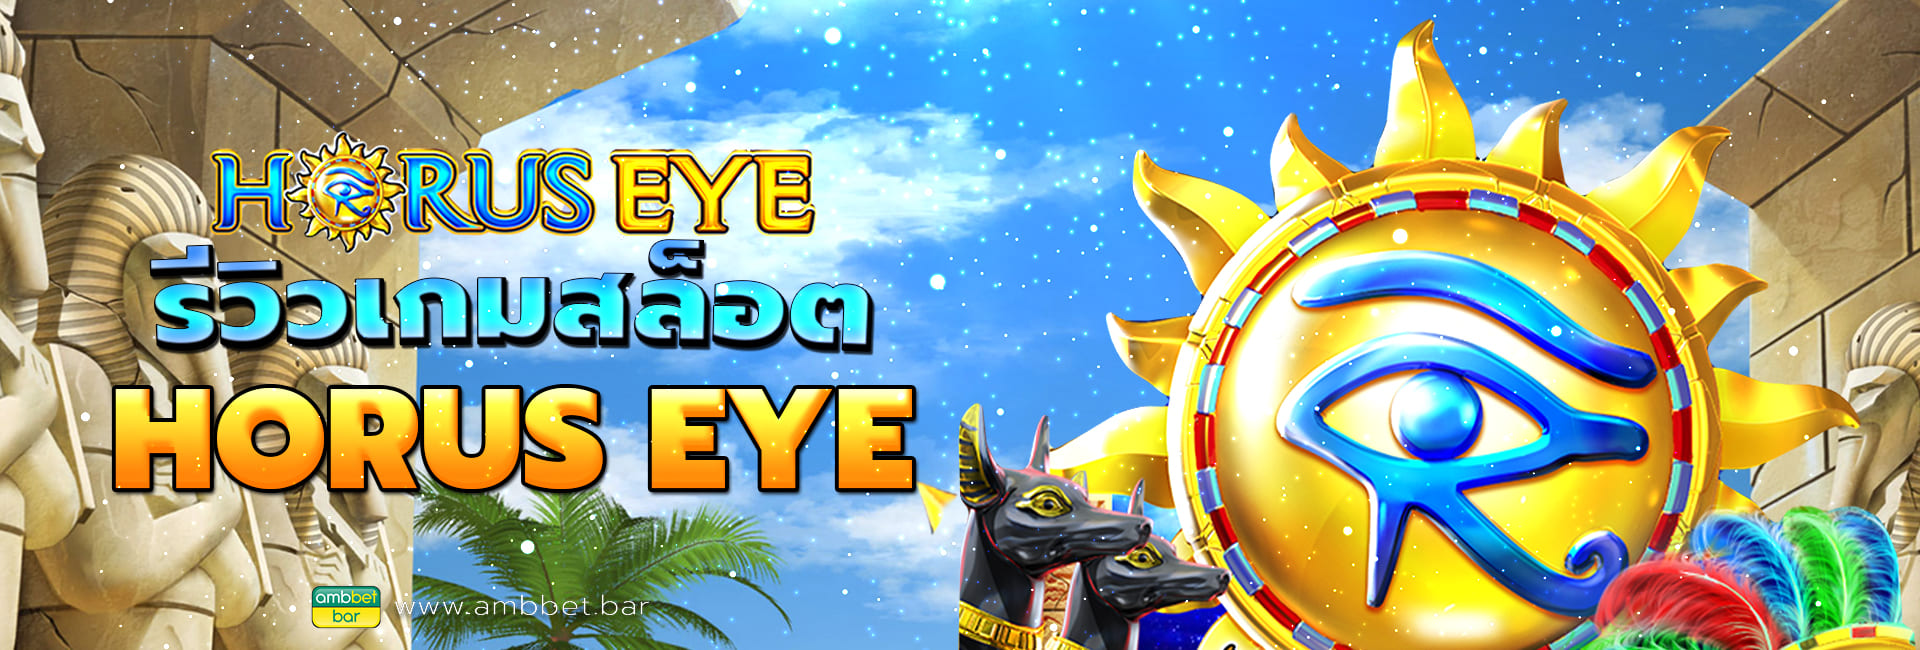 Horus Eye banner